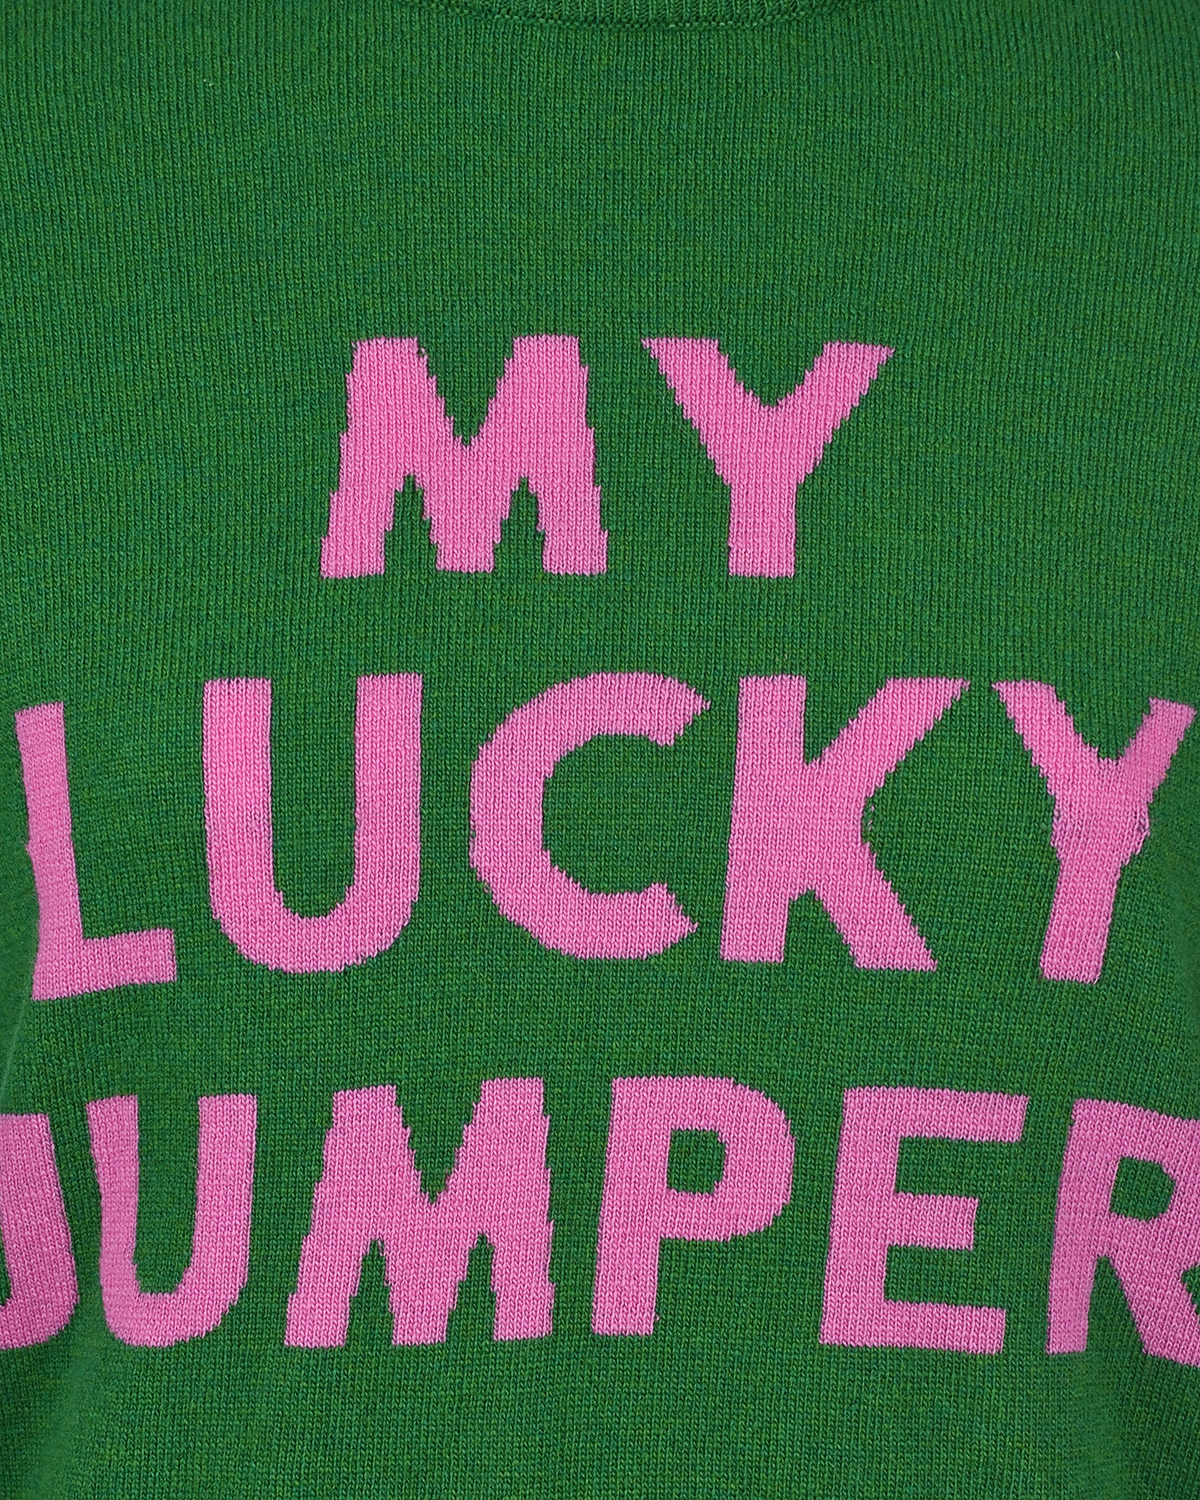 Зеленый джемпер с надписью "My lucky jumper" Markus Lupfer, размер 38 - фото 3